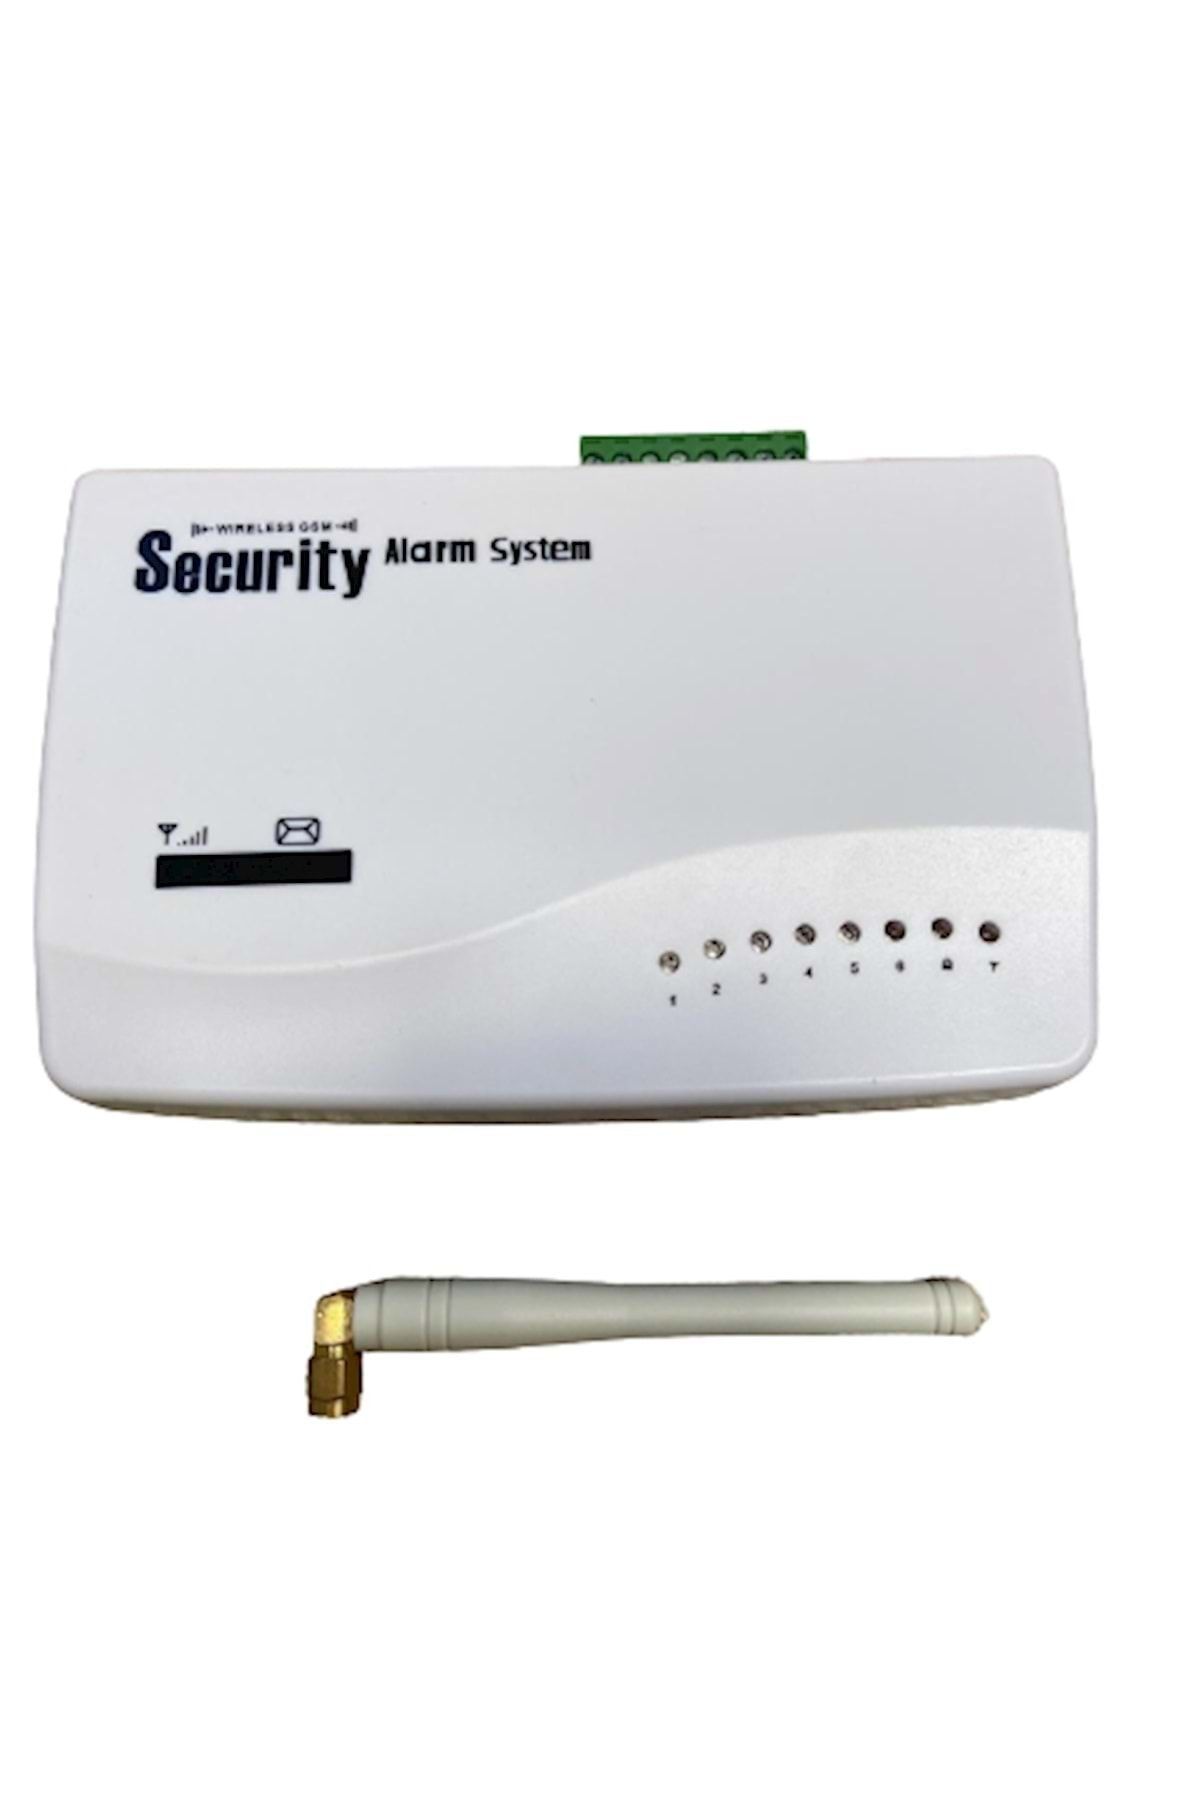 Kawai Gsm Alarm System Alarm Kontrol Paneli Asm-2200